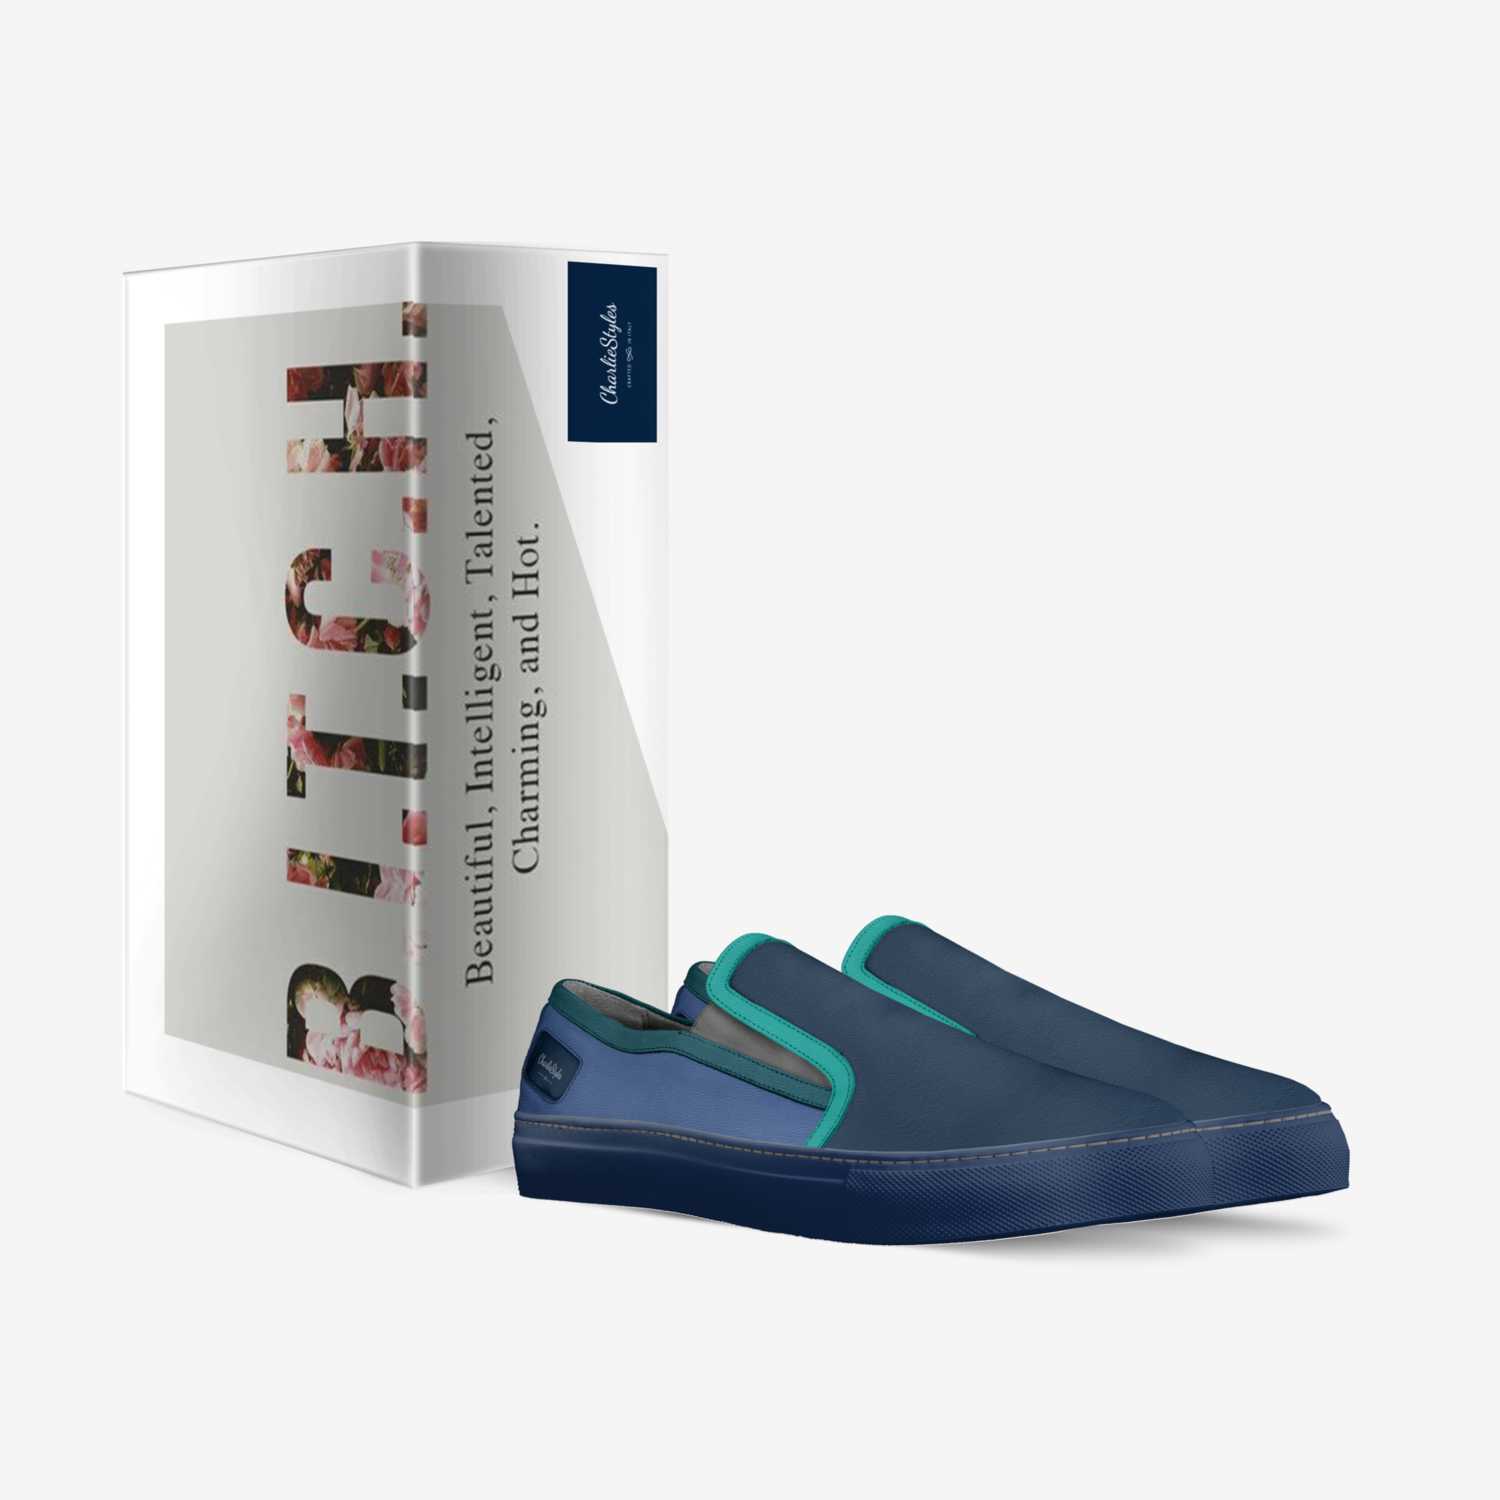 CharlieStyles custom made in Italy shoes by Rowan Humphreys | Box view